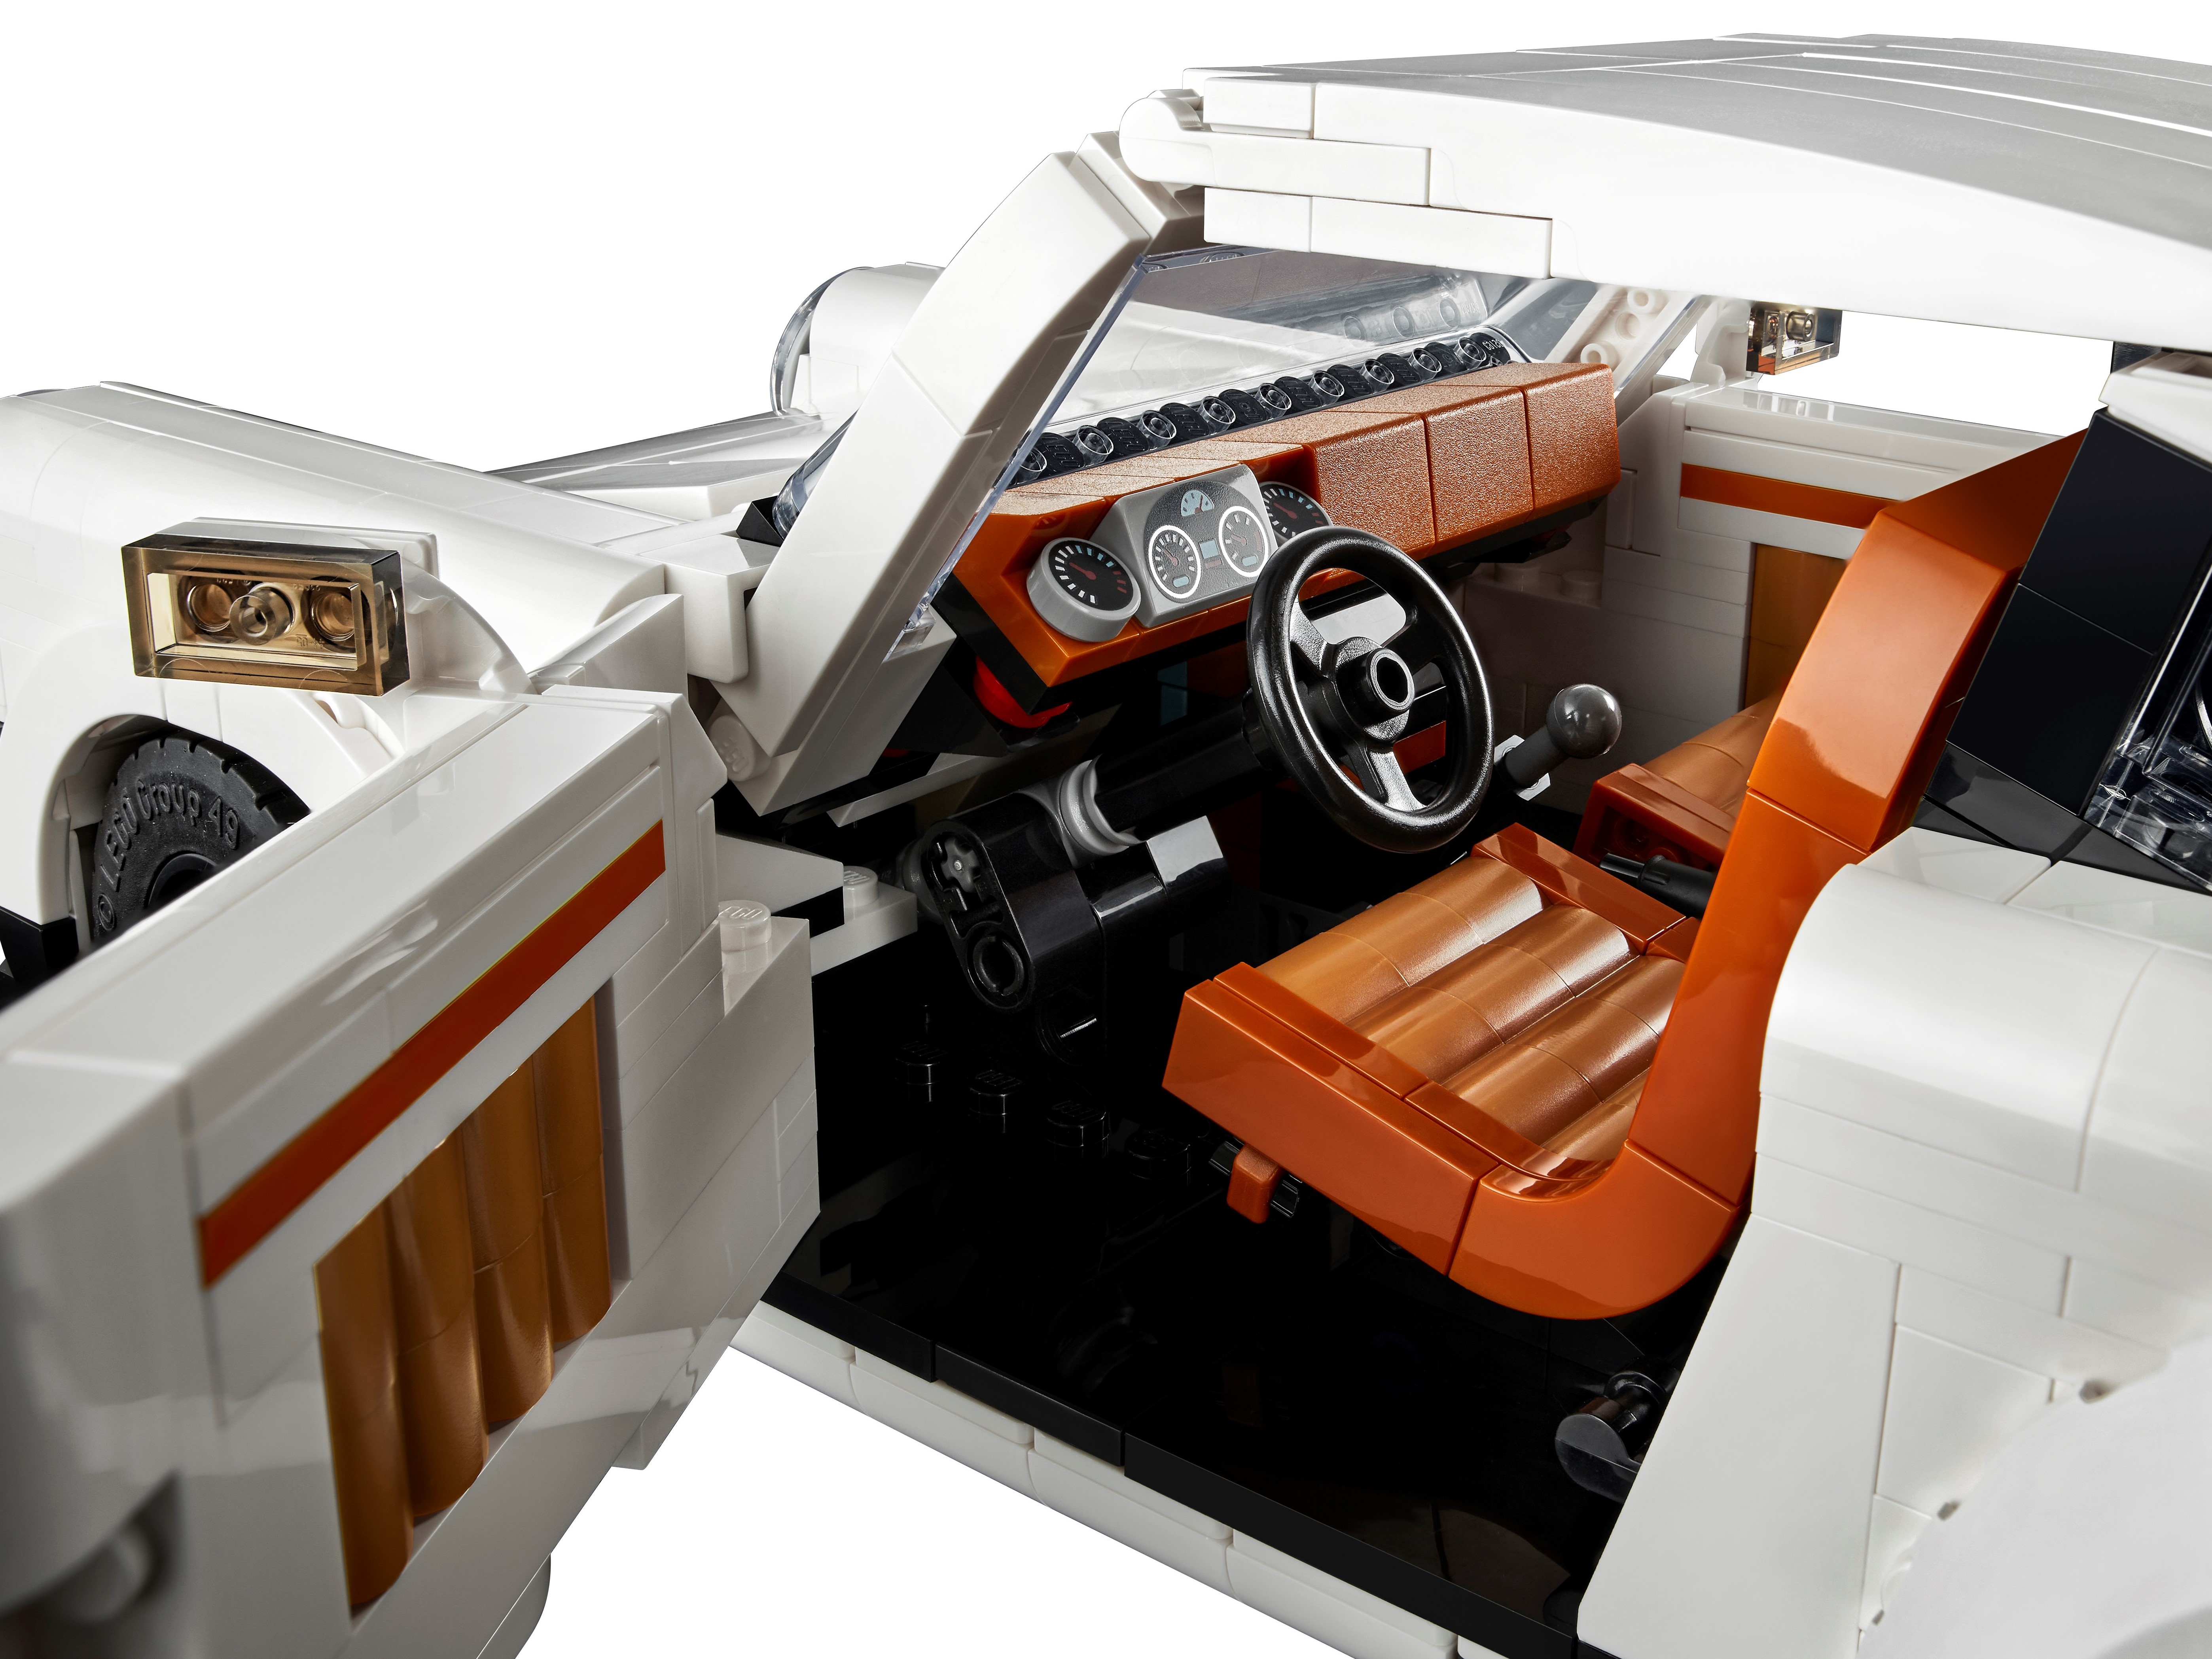 Lego Creator Set 911 Turbo & 911 Targa article – Poitiers